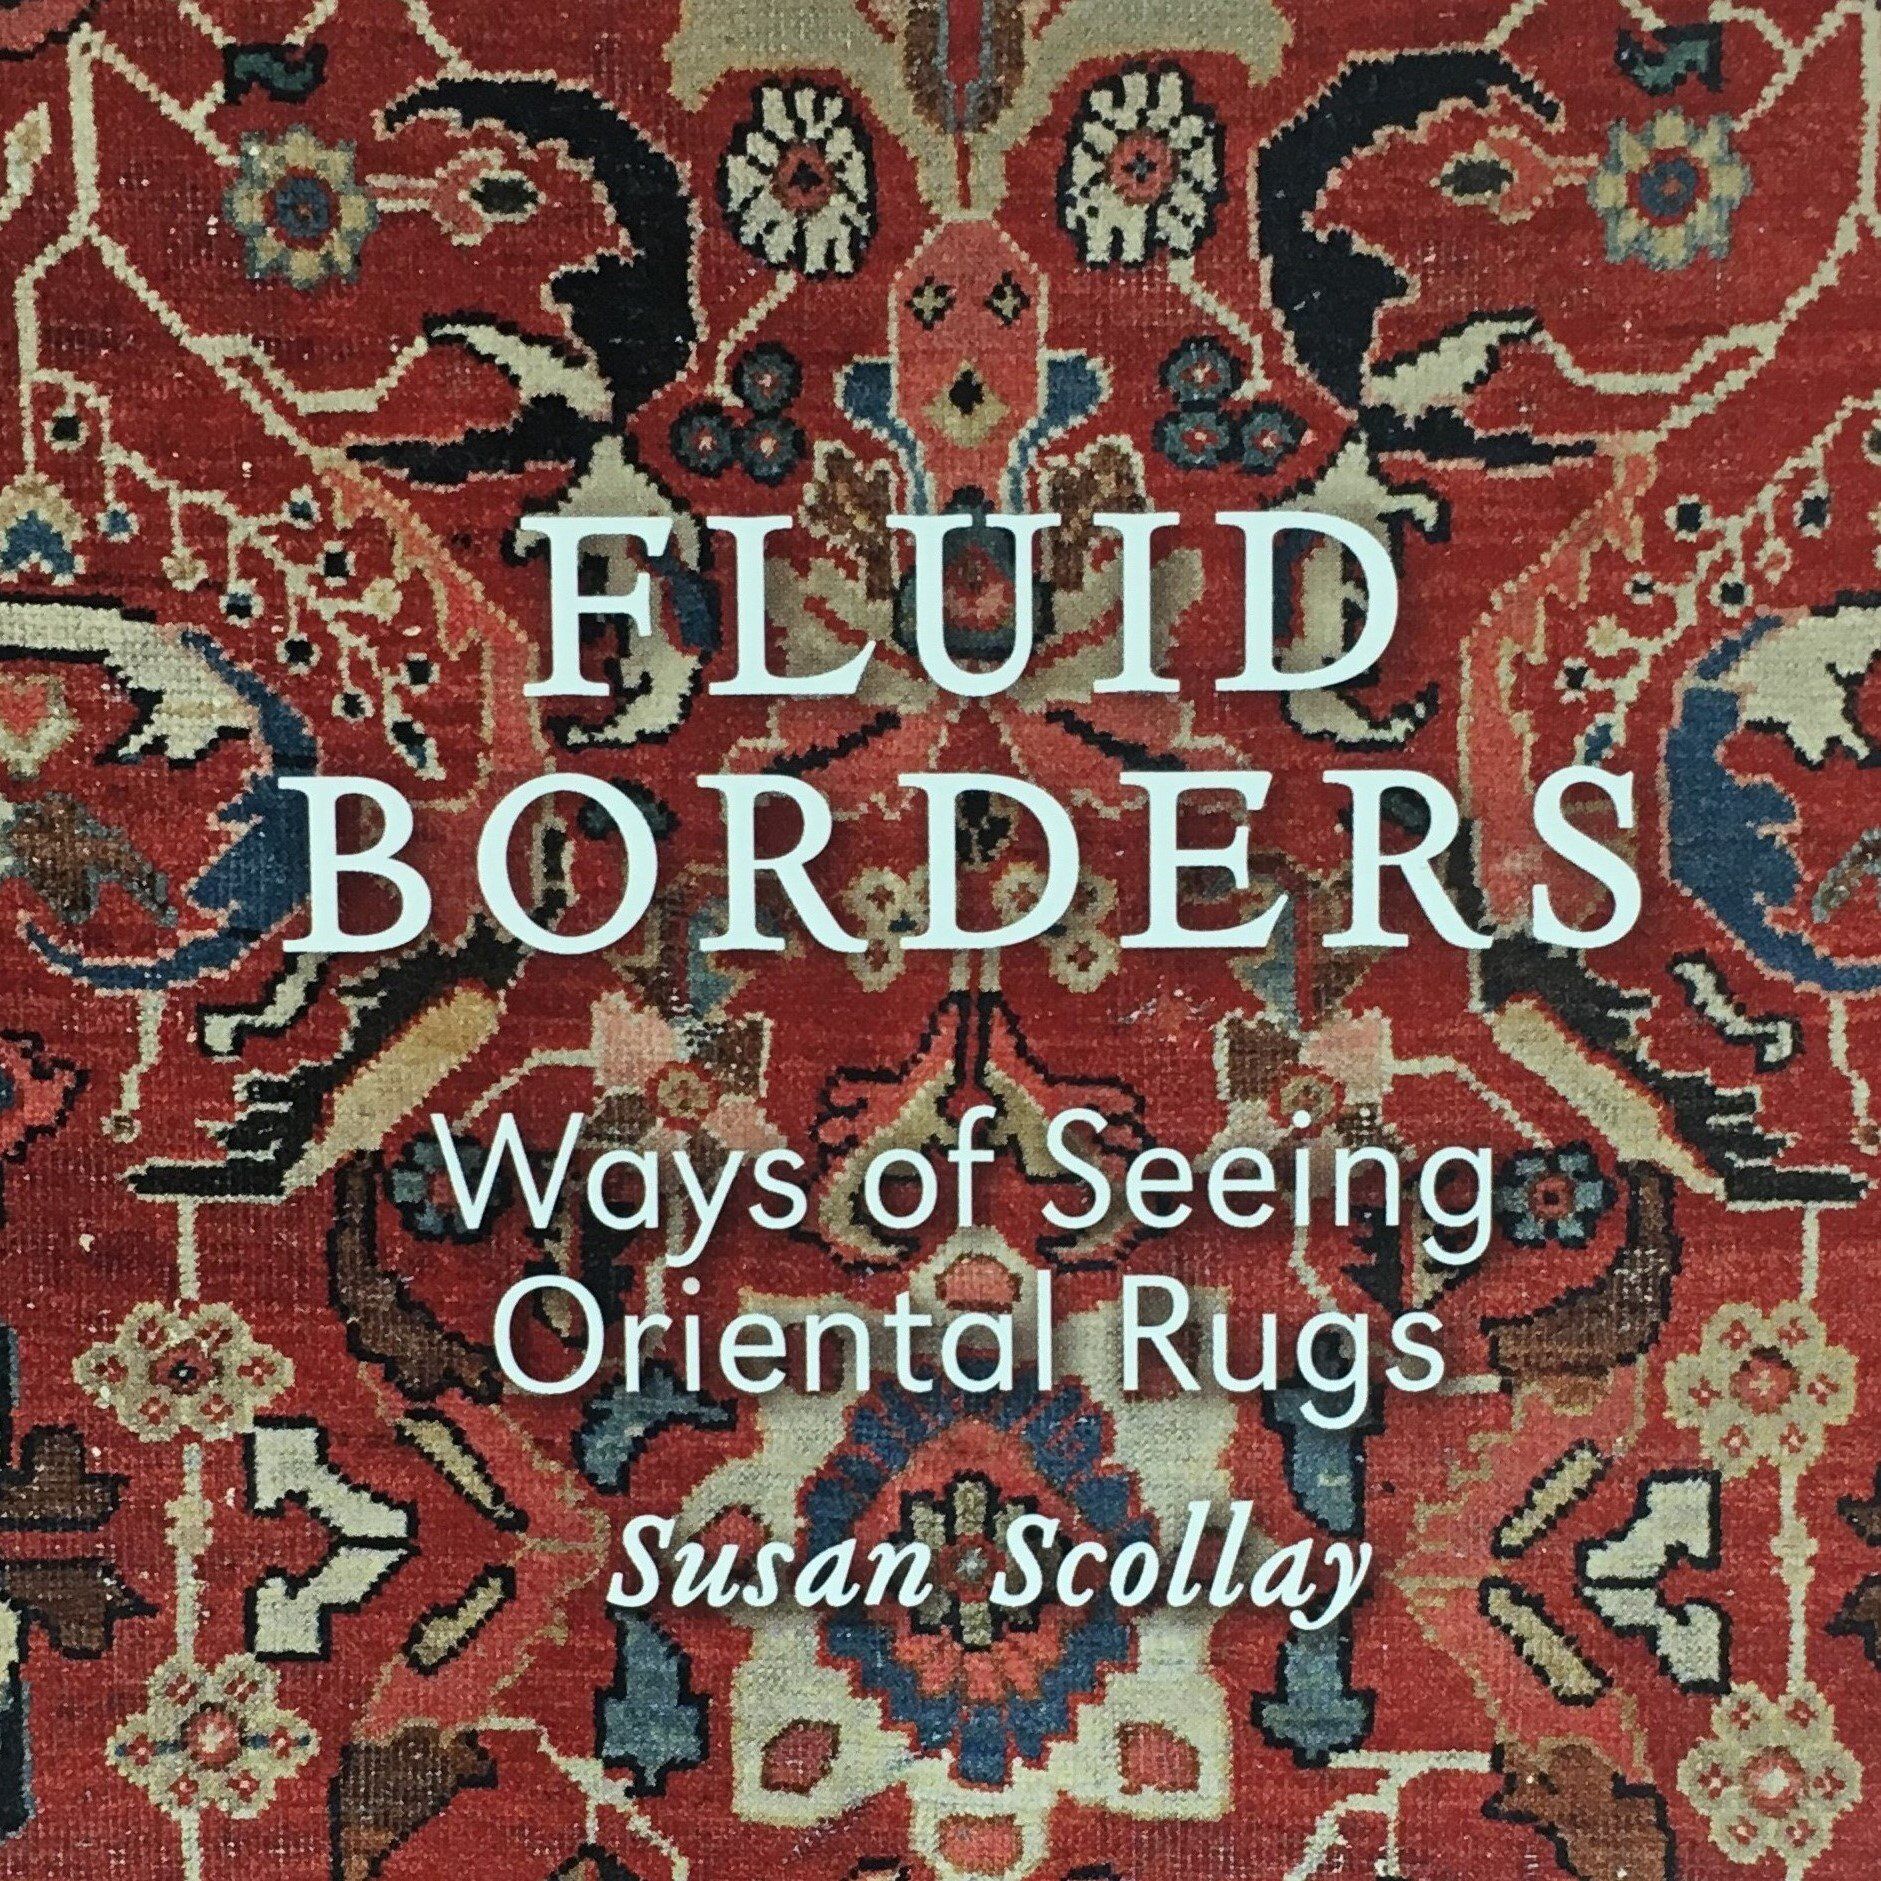 TJC Fluid Borders: Ways of Seeing Oriental Rugs by Susan Scollay